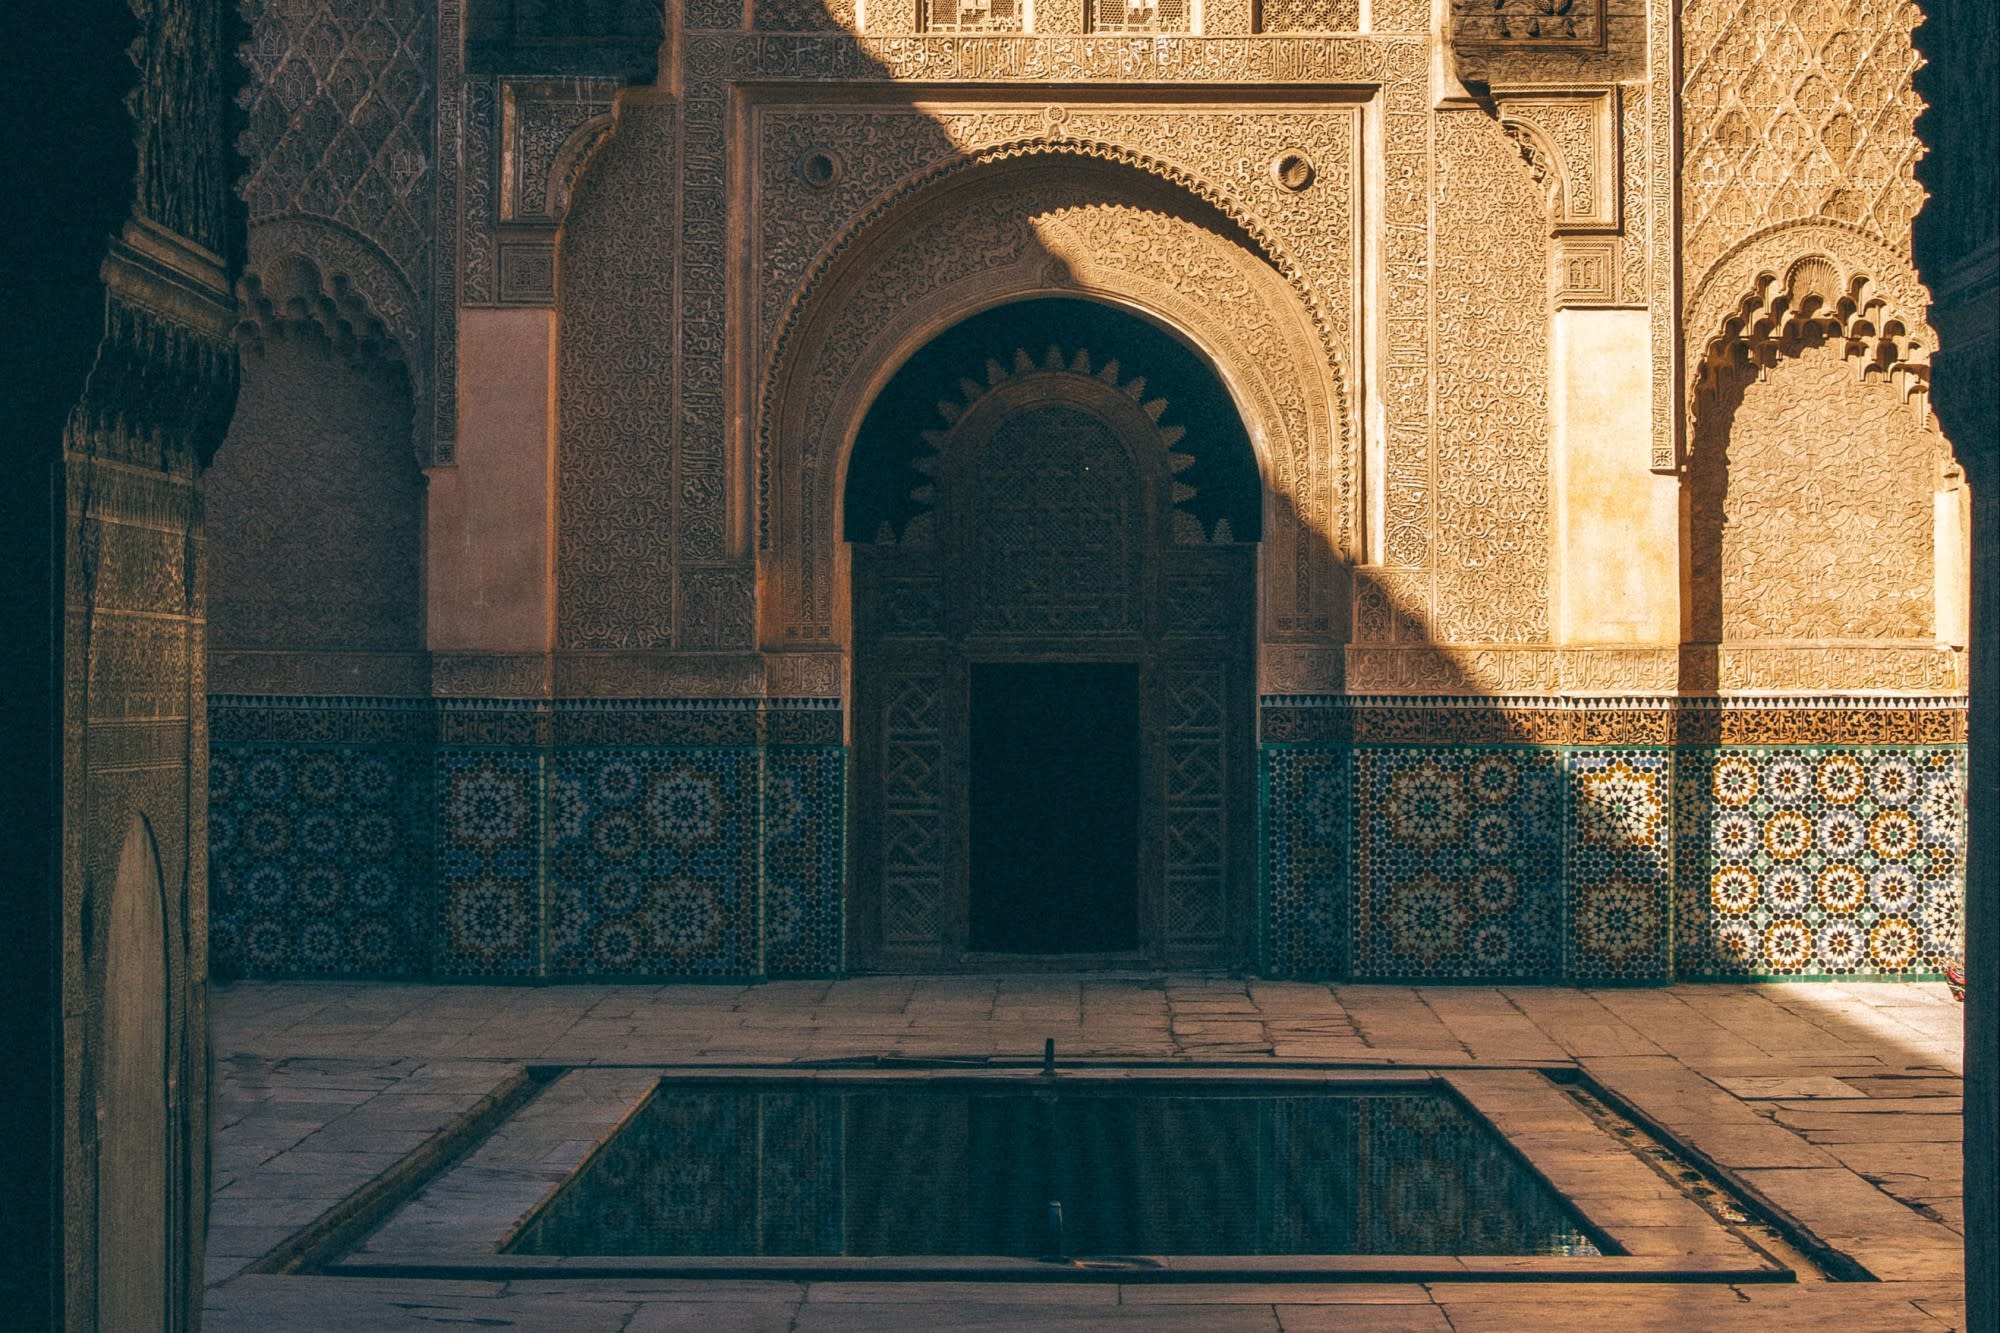 Marrakech archway